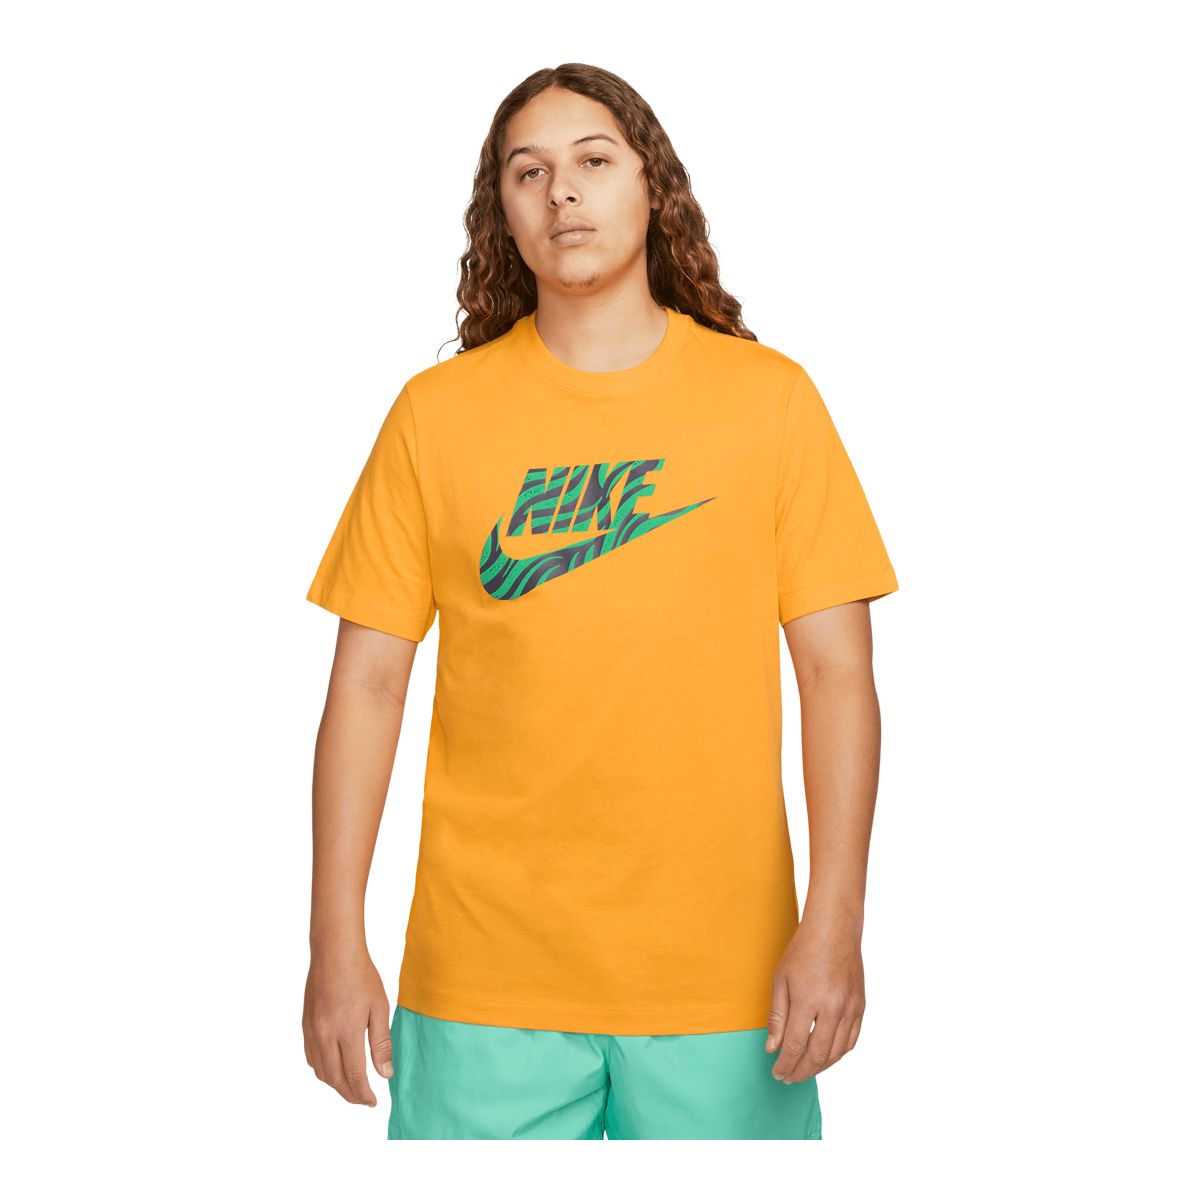 Nike Sportswear Men's Club+ Multi Logo Shorts